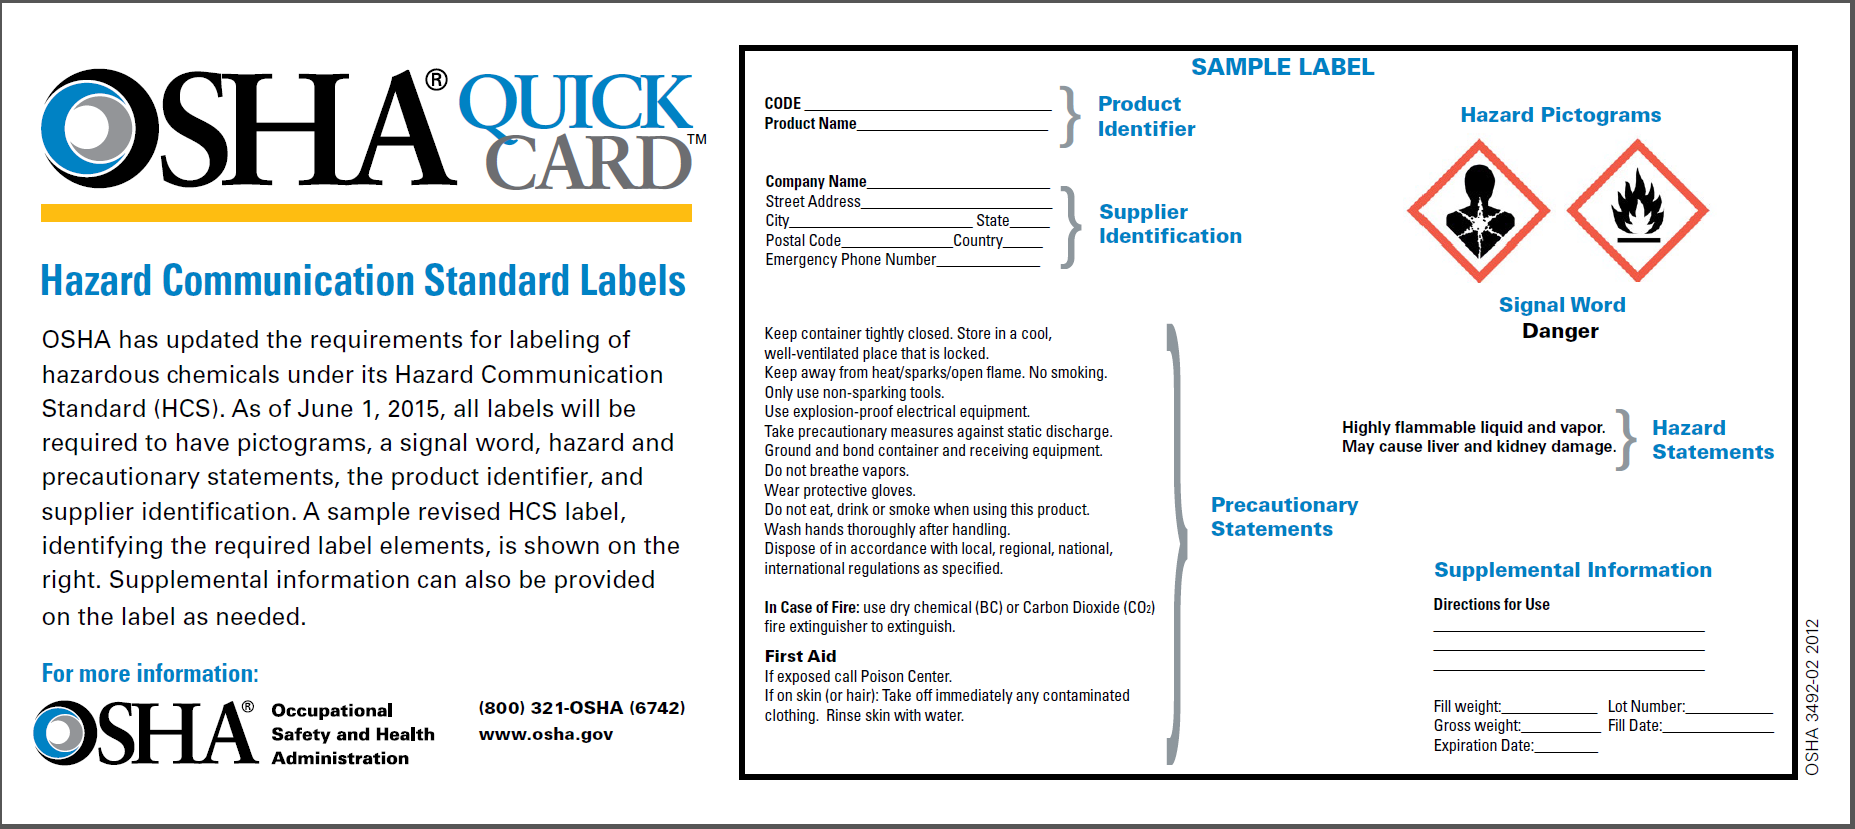 OSHA-Quick-Card.png